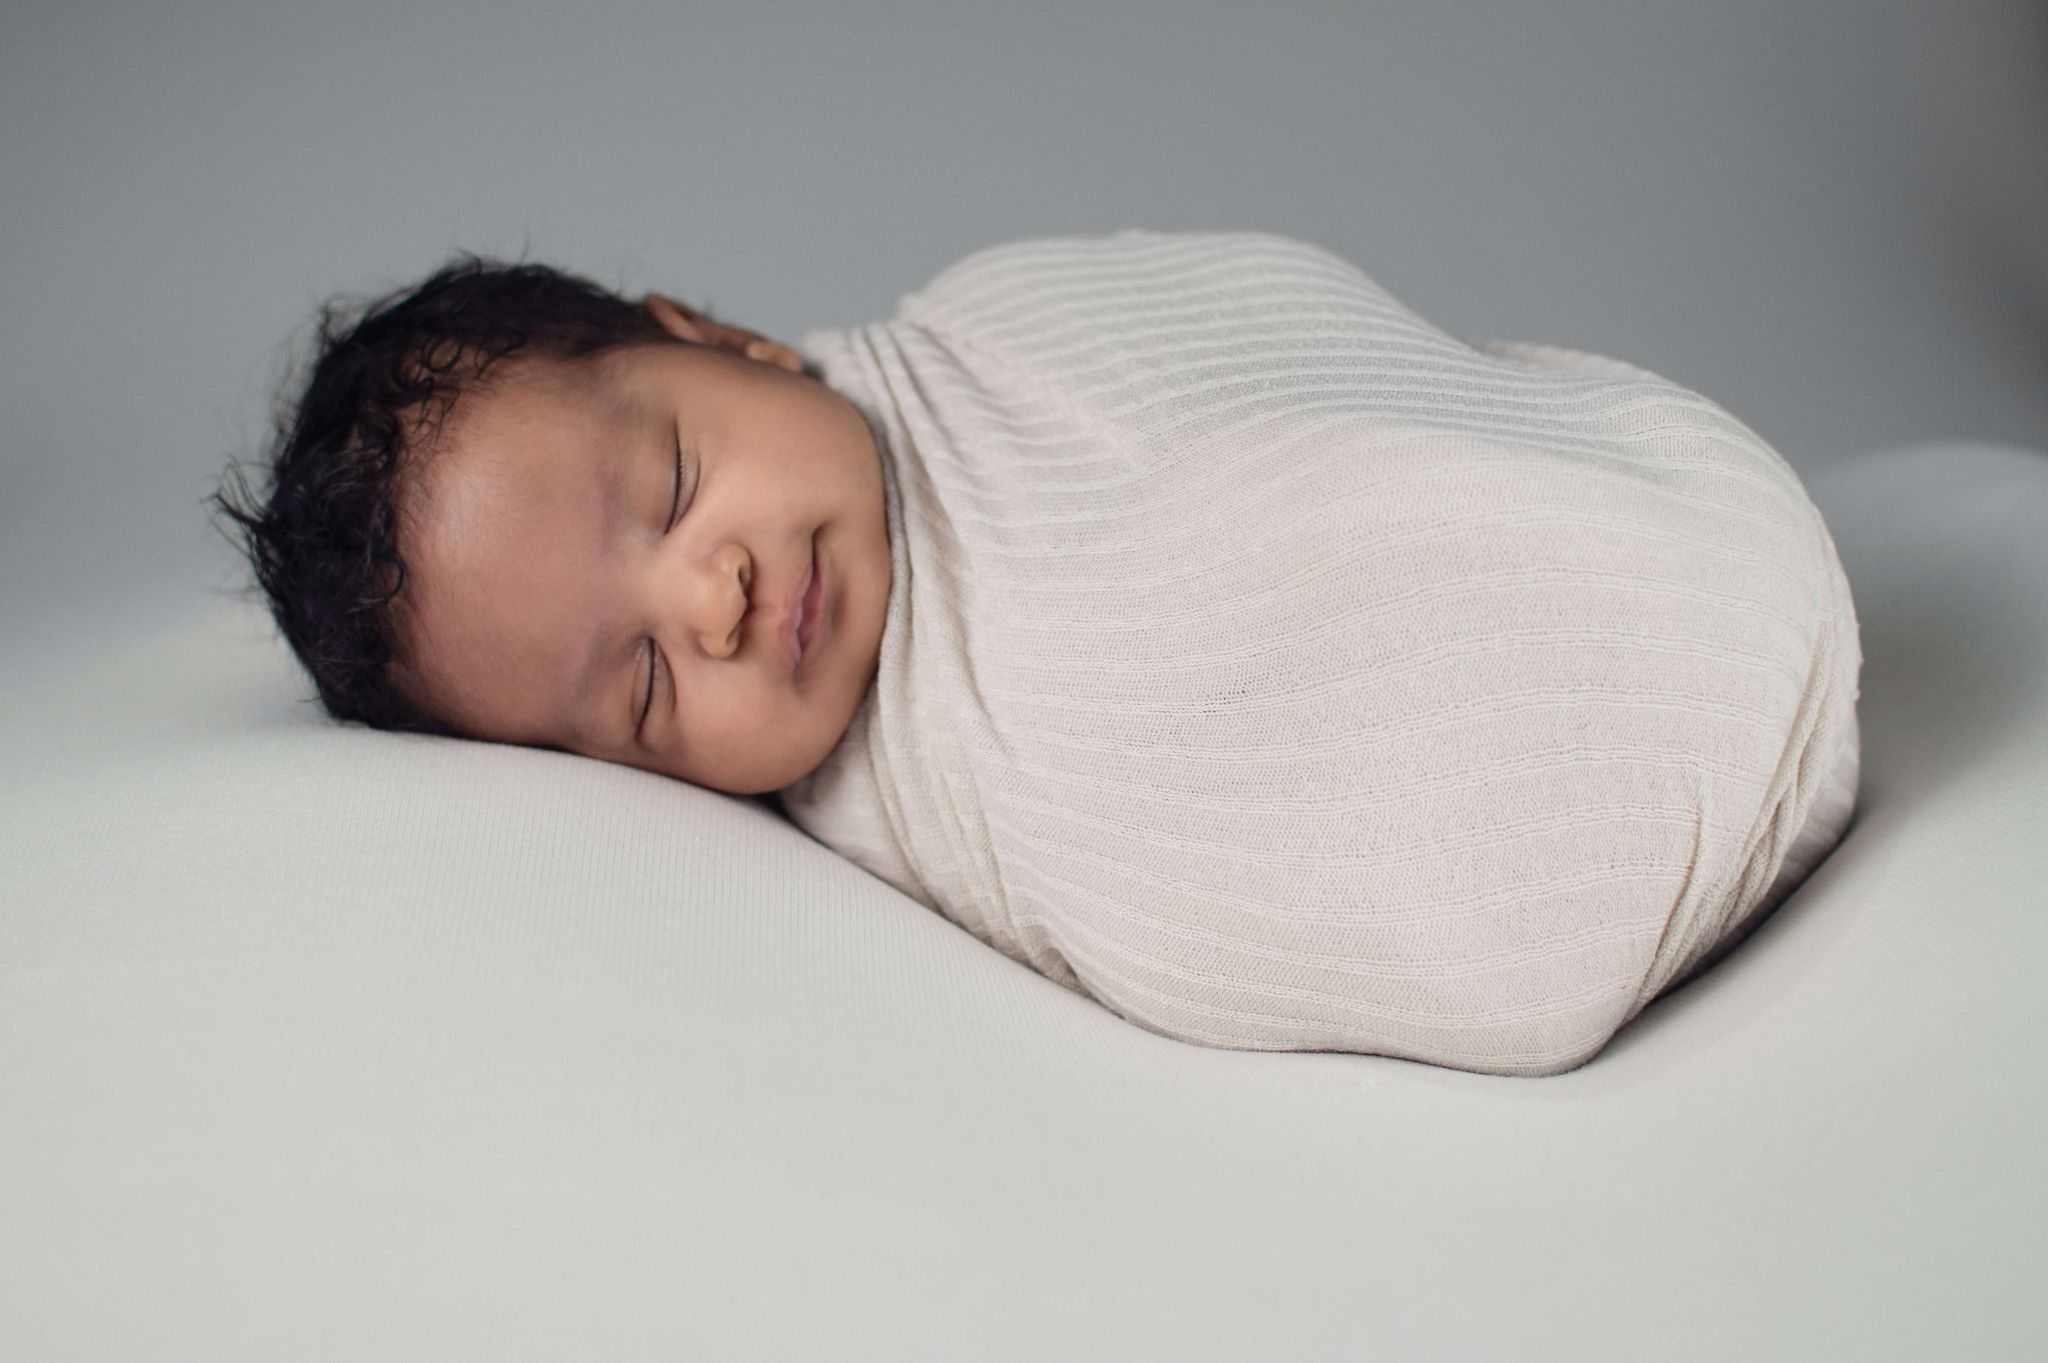 Where should a newborn sleep at night